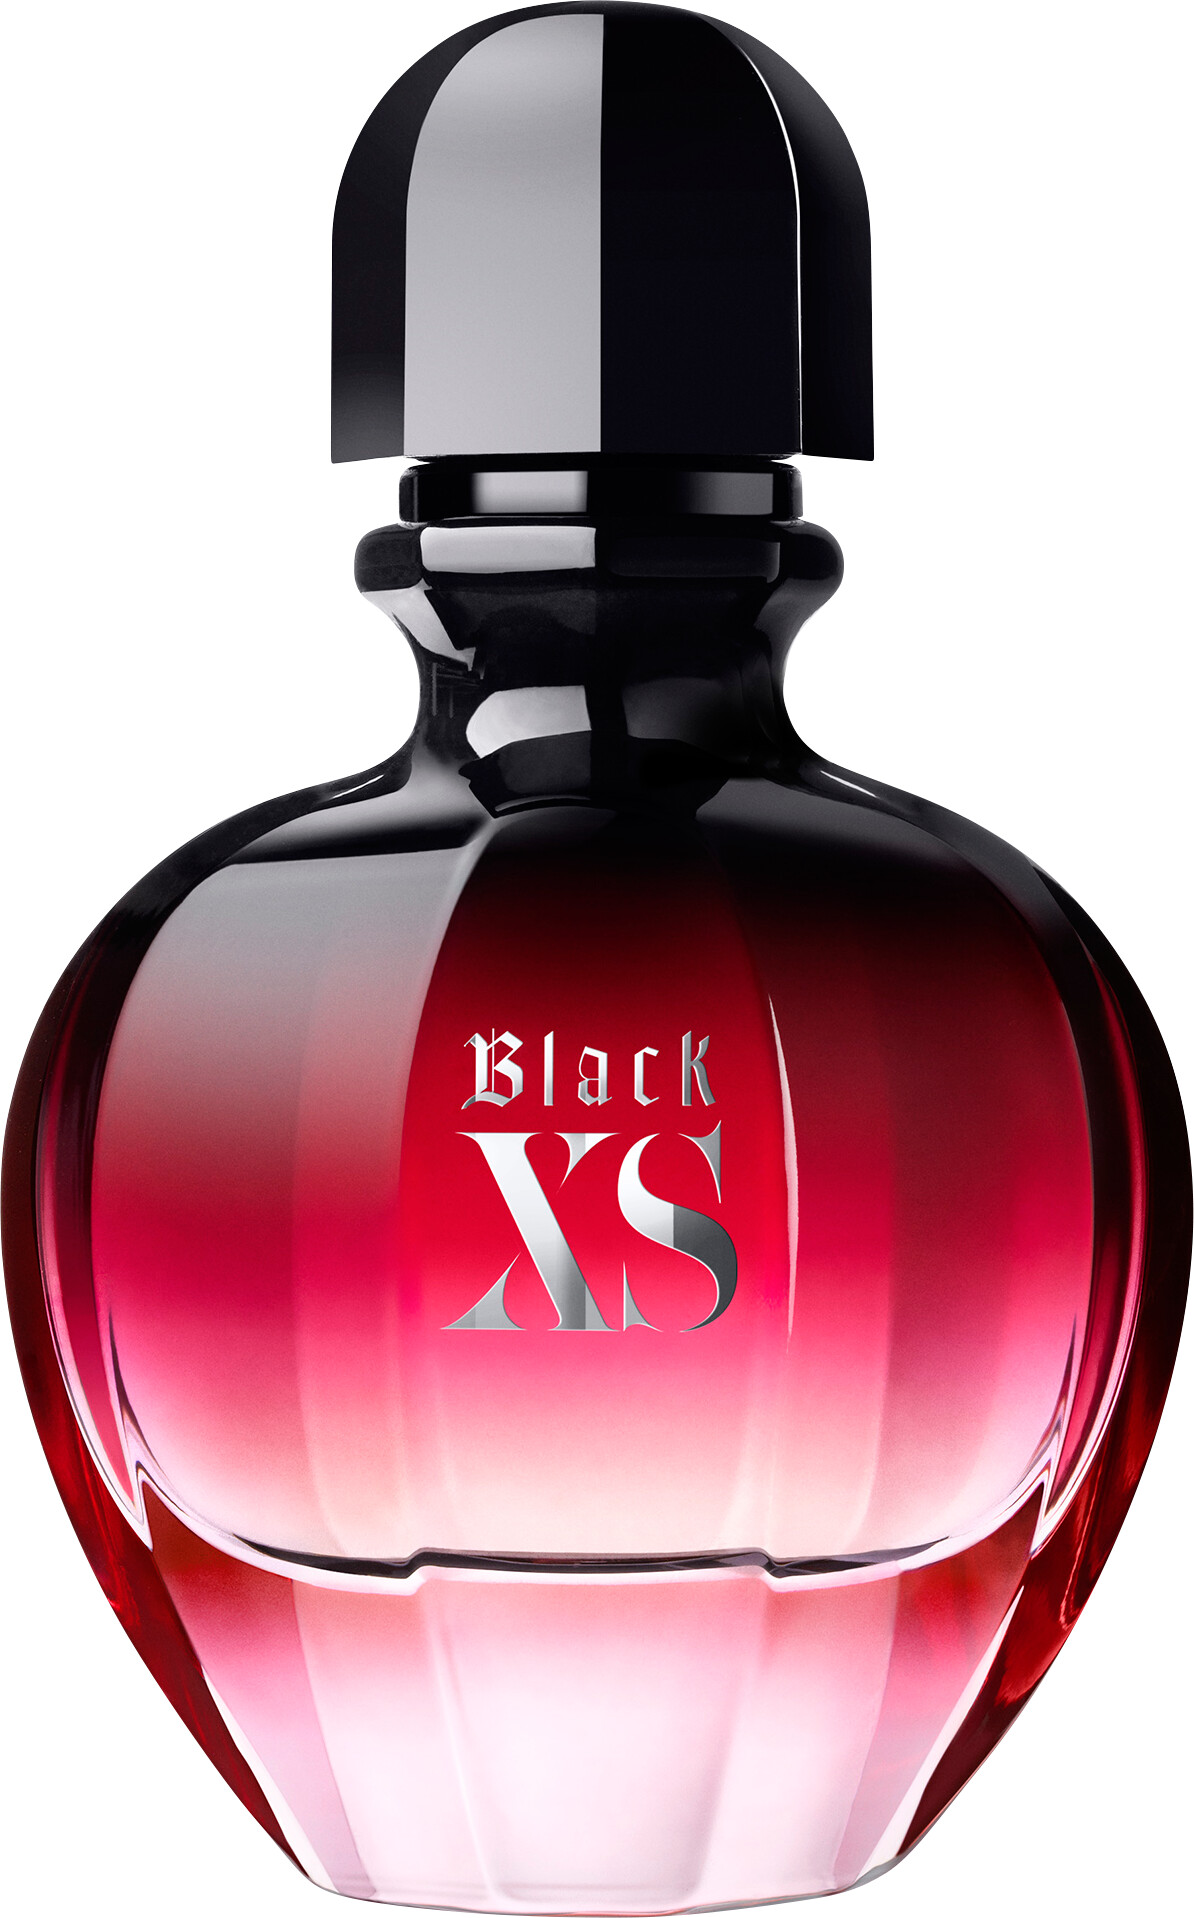 Rabanne BlackXS For Her Eau de Parfum Spray 50ml